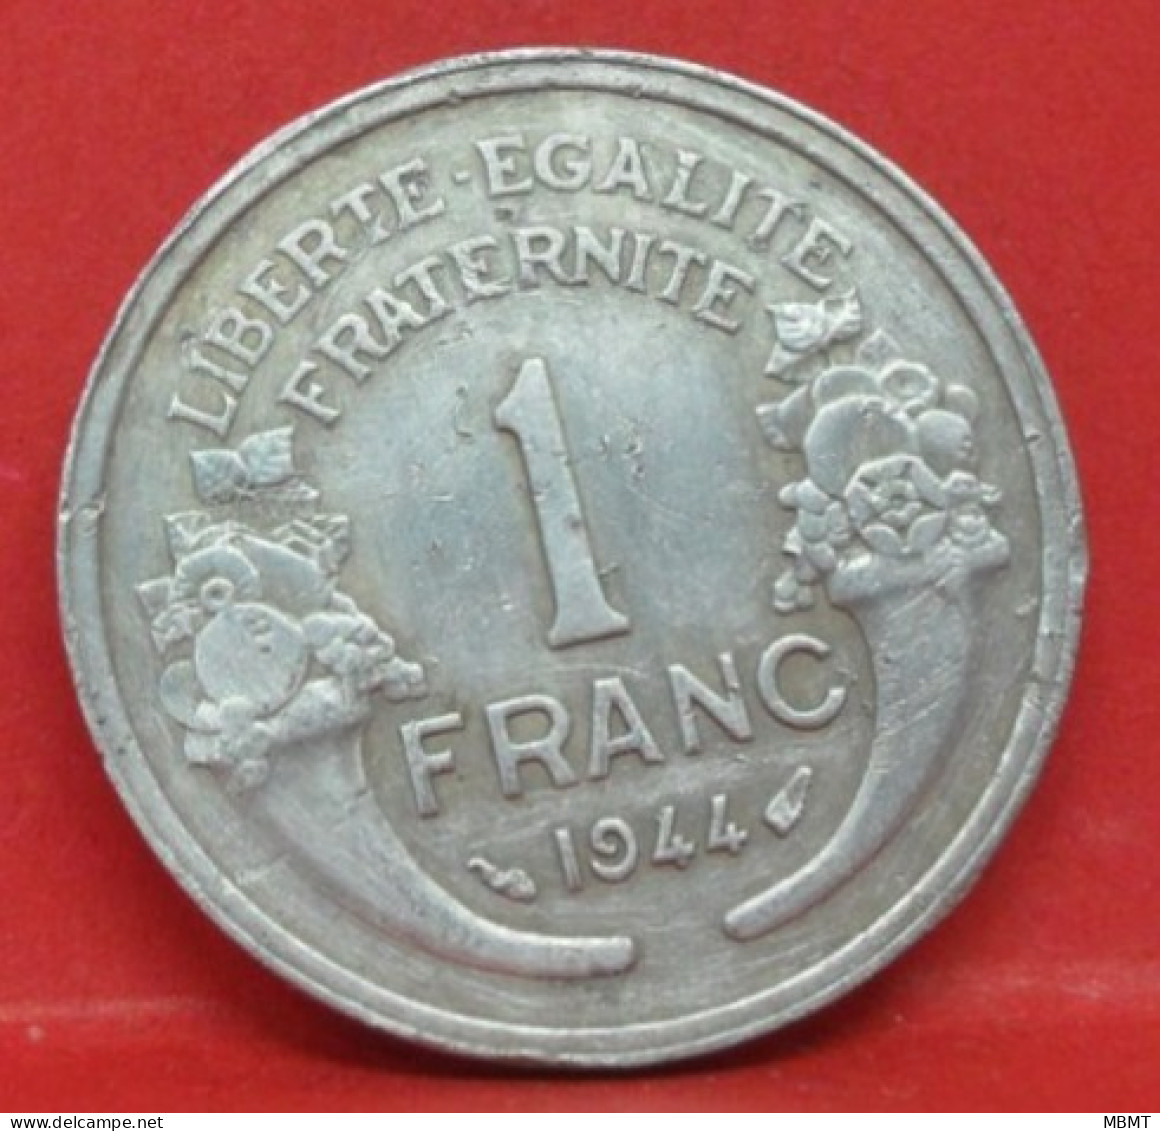 1 Franc Morlon Alu 1944 - TTB - Pièce Monnaie France - Article N°665 - 1 Franc